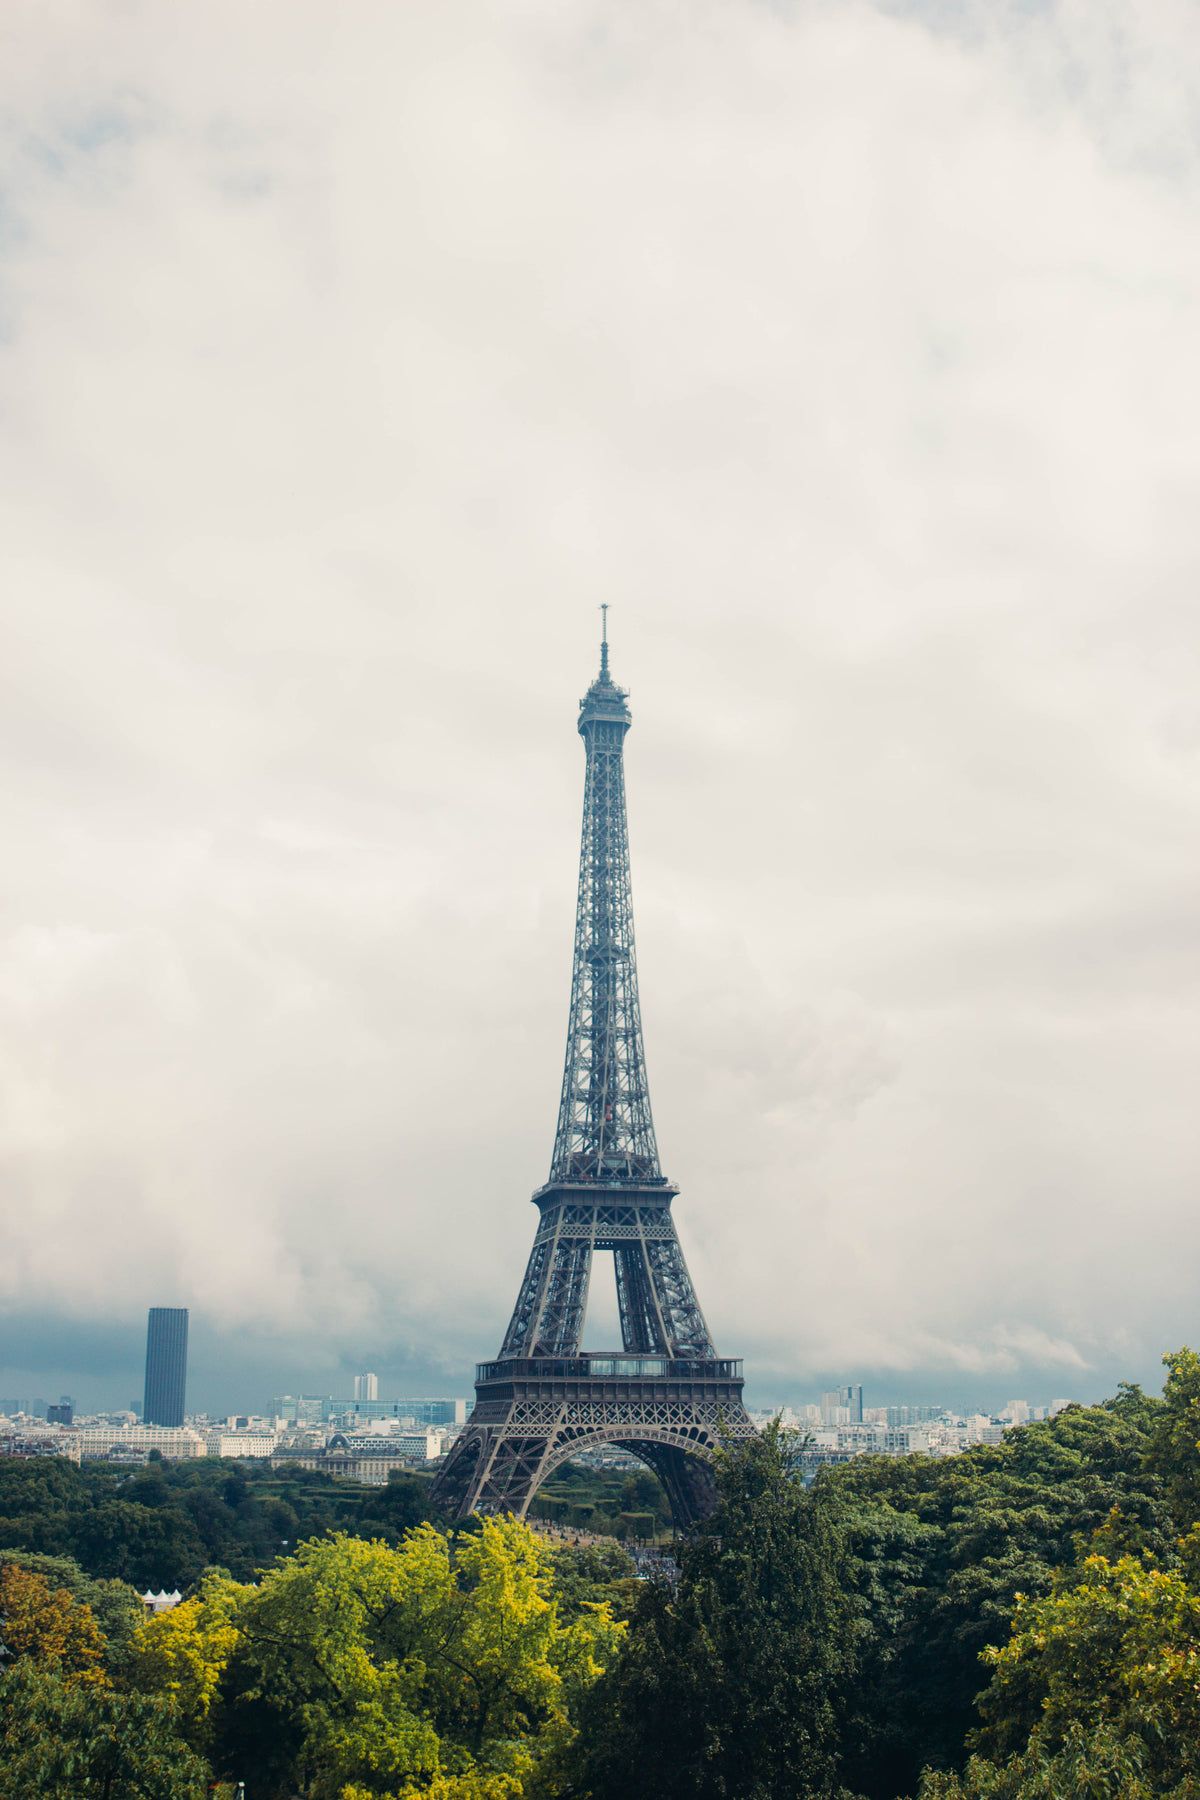 The eiffel tower is in a park - Eiffel Tower, Paris